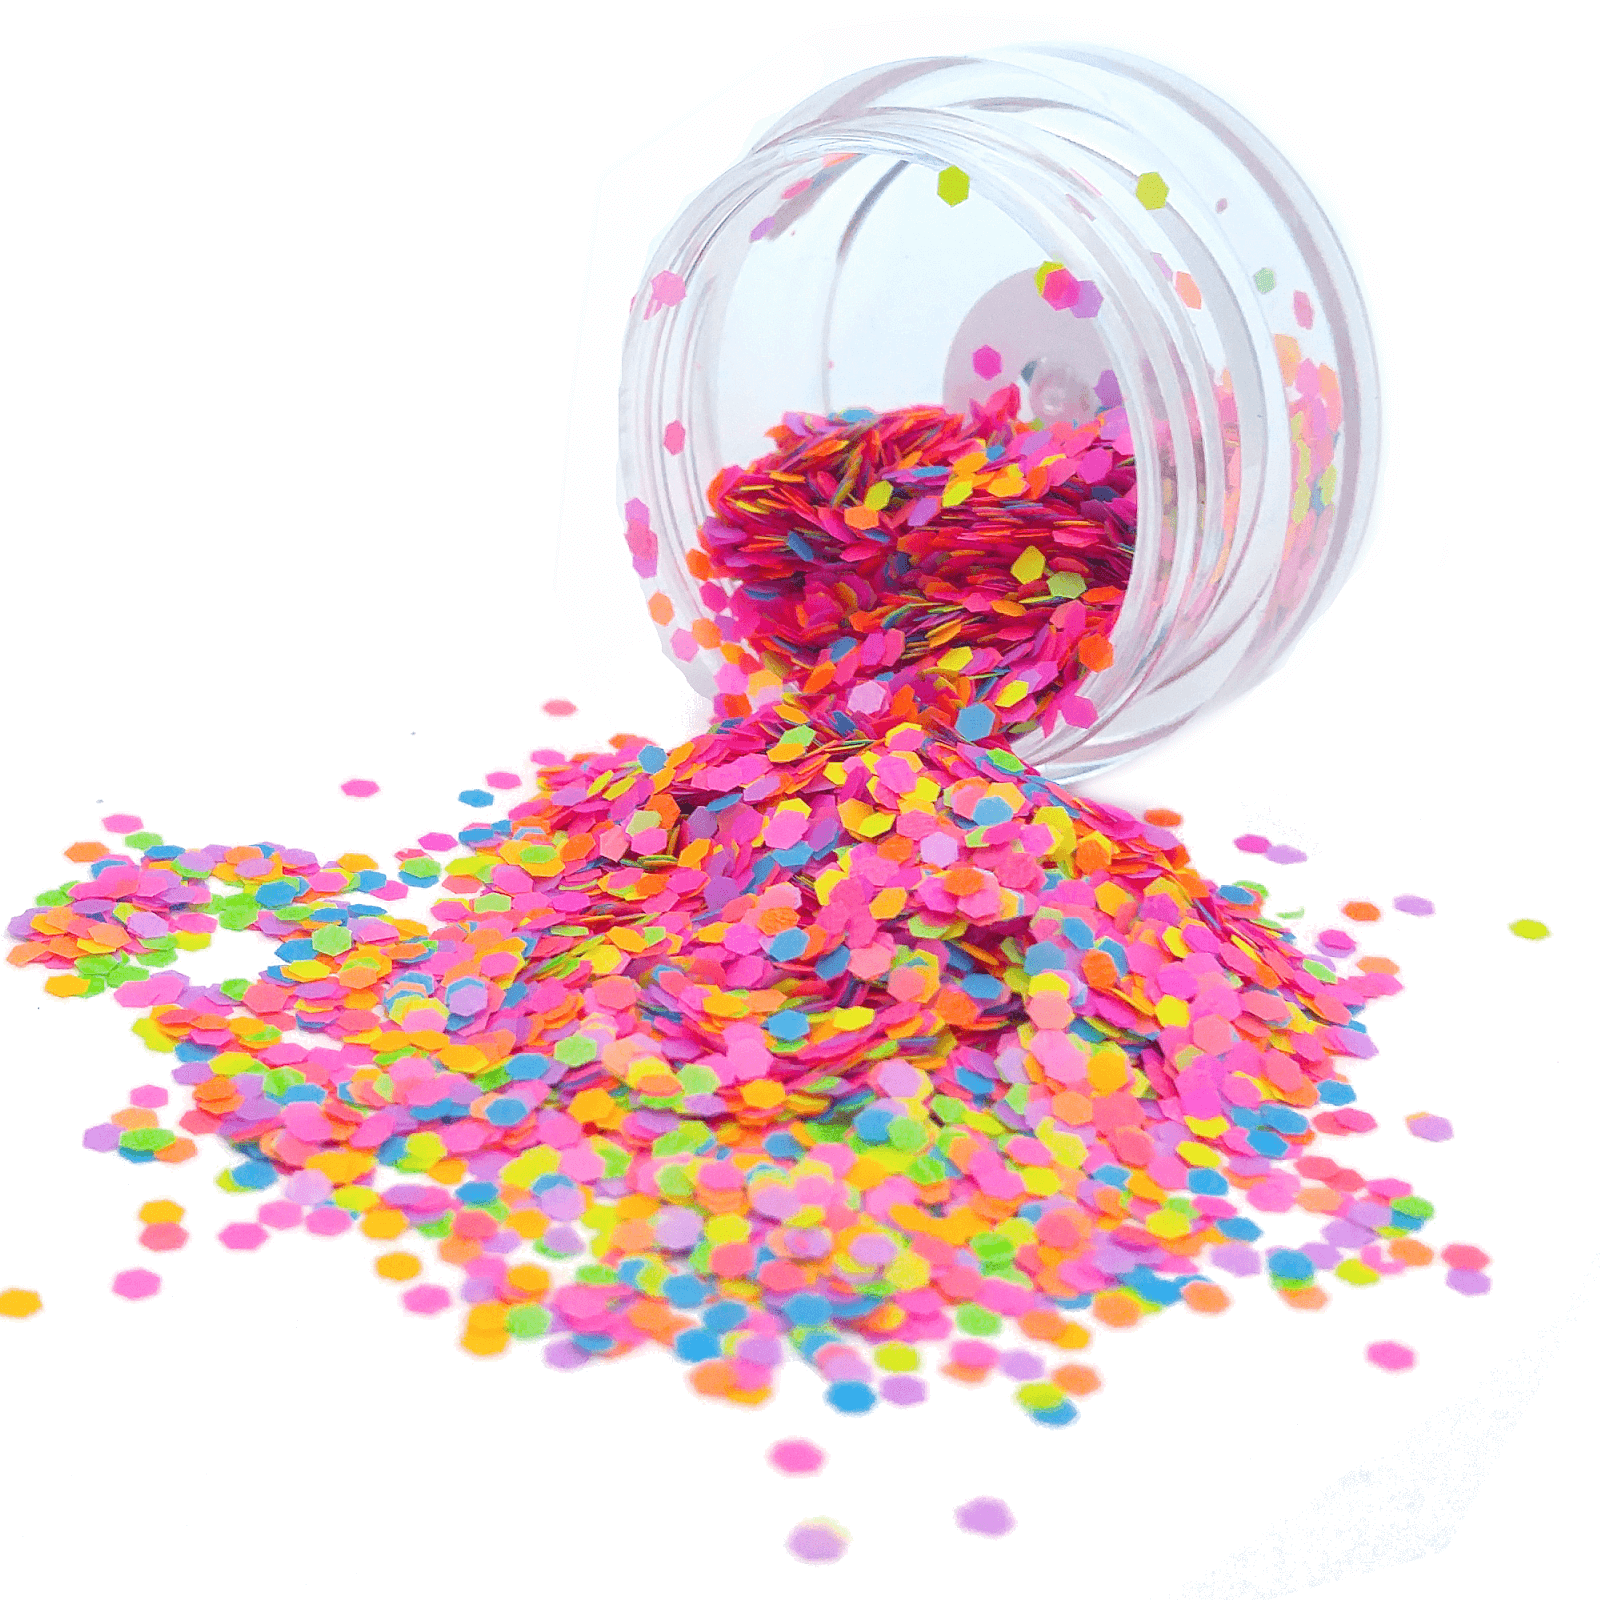 Neon Hexagon Glitter Mix 1.5mm - Totally Tubular  By Crazoulis Glitter